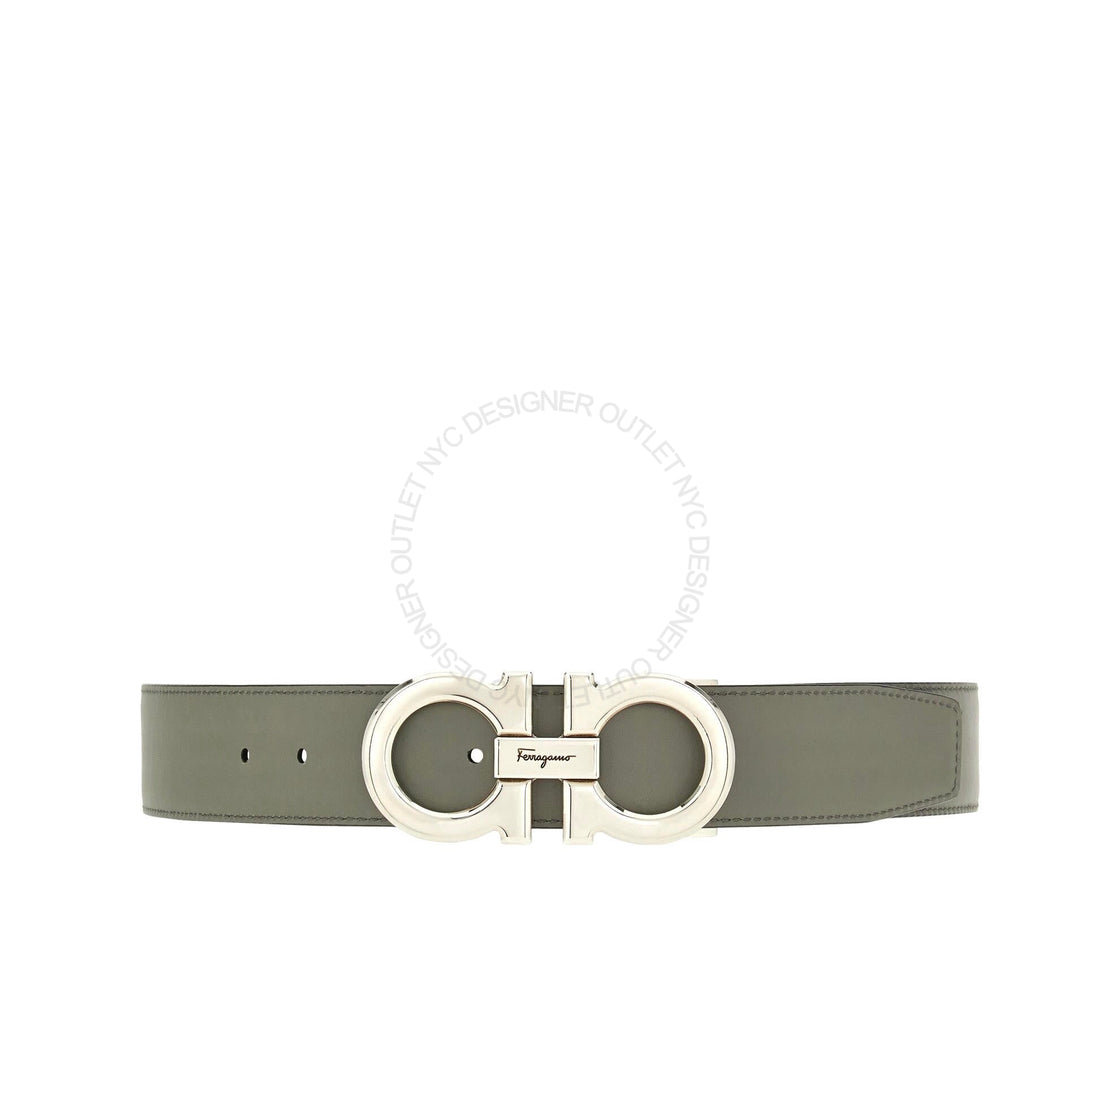 Ferragamo Grey/Maroon Leather Adjustable belt